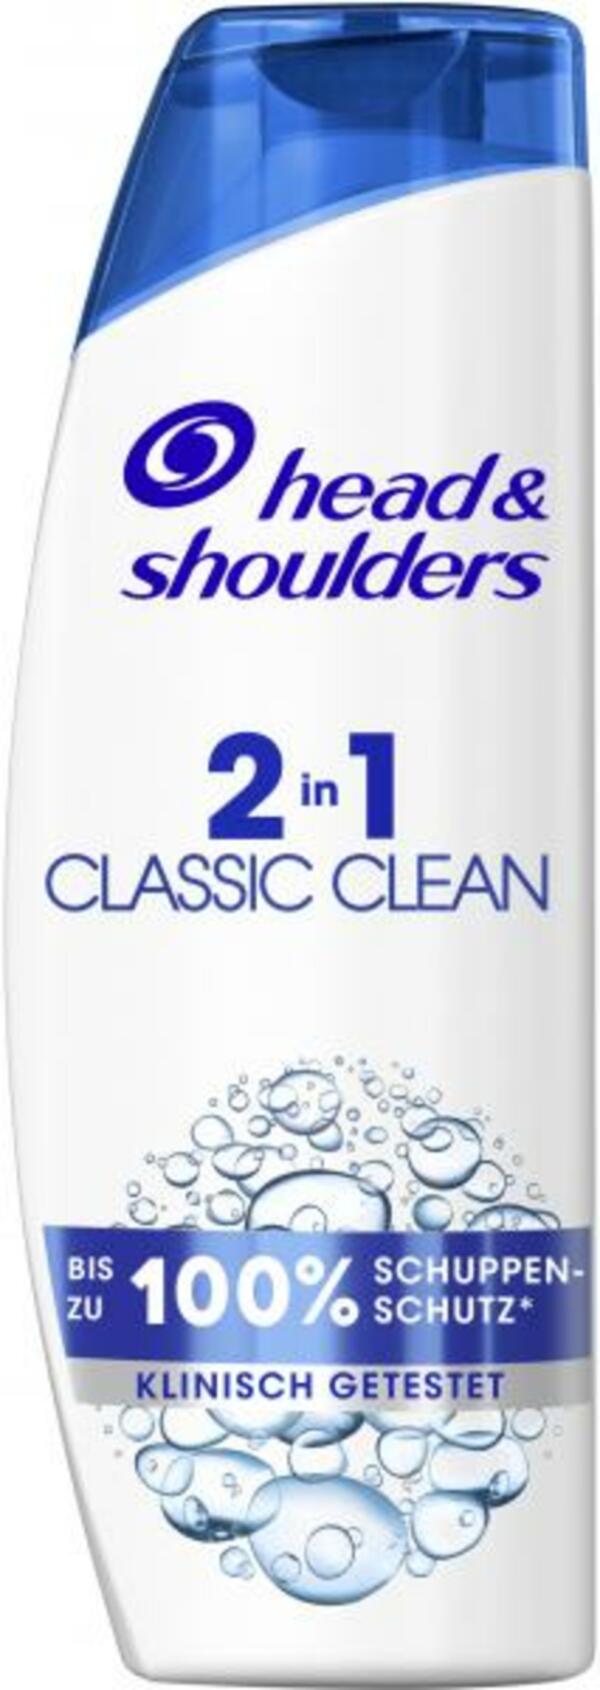 Bild 1 von Head & Shoulders Shampoo 2in1 Classic Clean